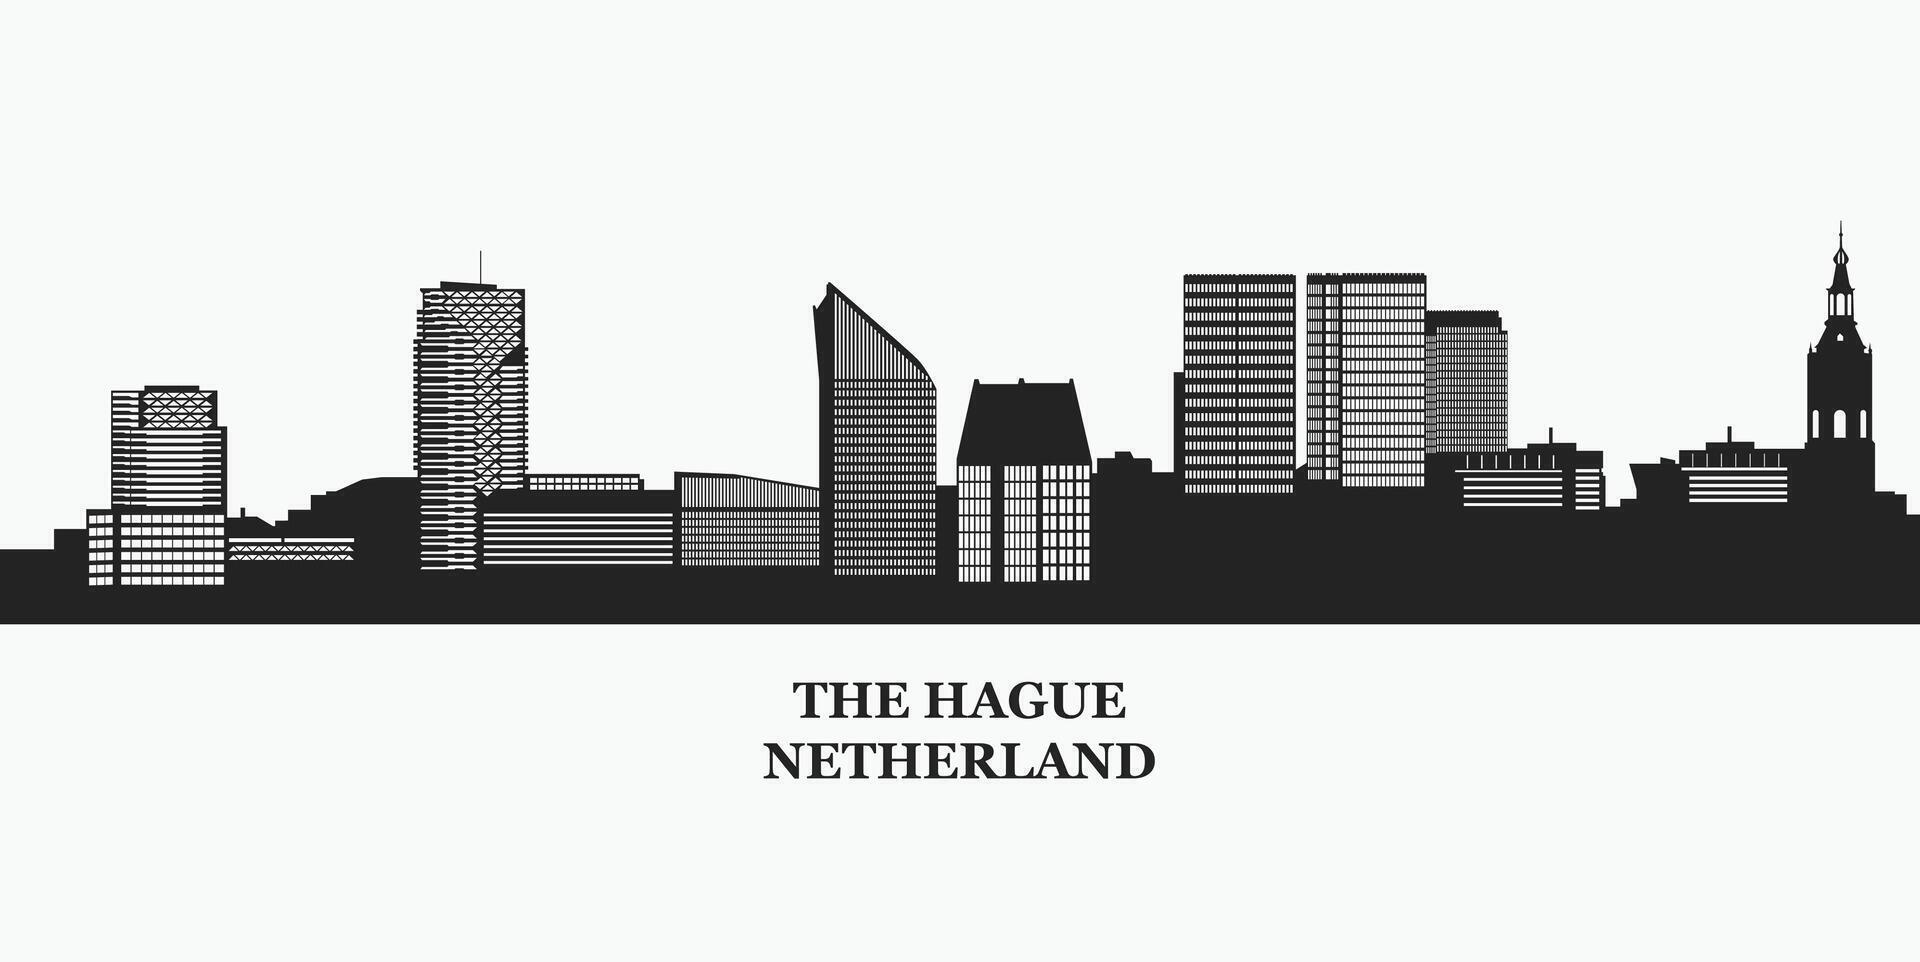 The Hague city skyline silhouette illustration vector